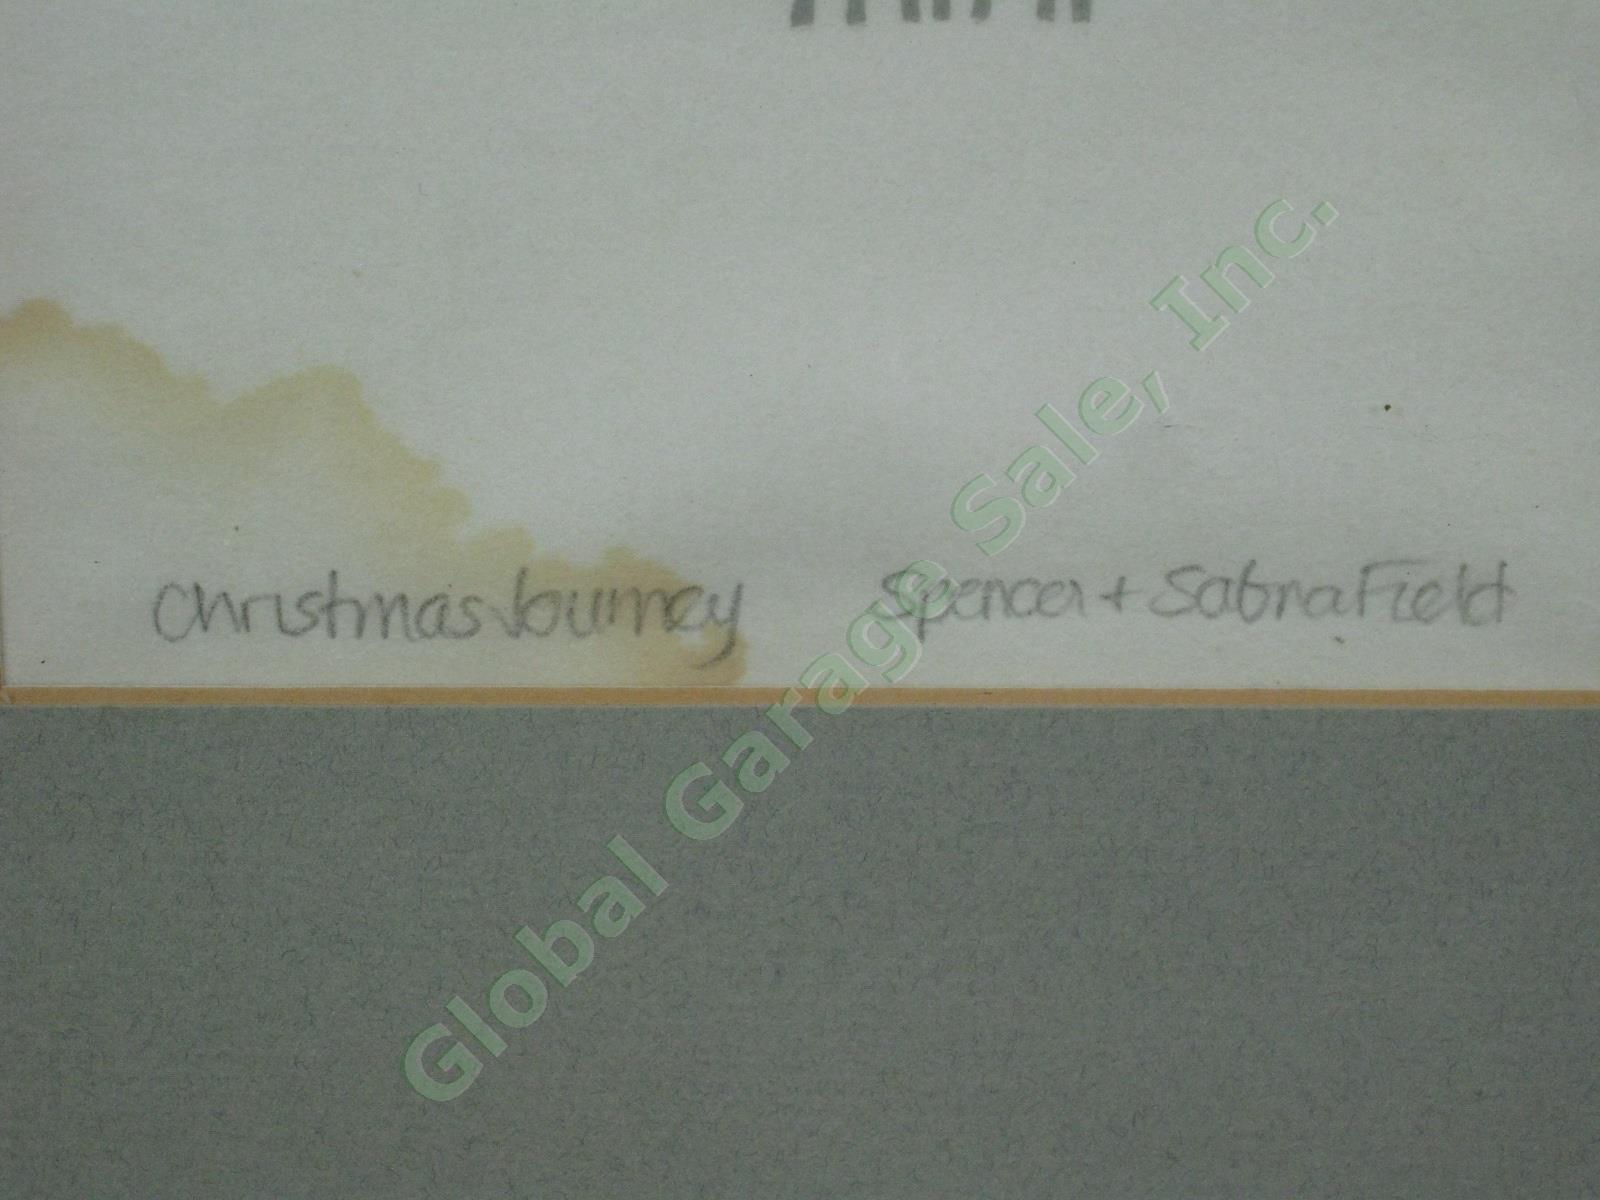 Vtg 1983 Spencer + Sabra Field Signed Christmas Journey Woodcut Woodblock Print 2